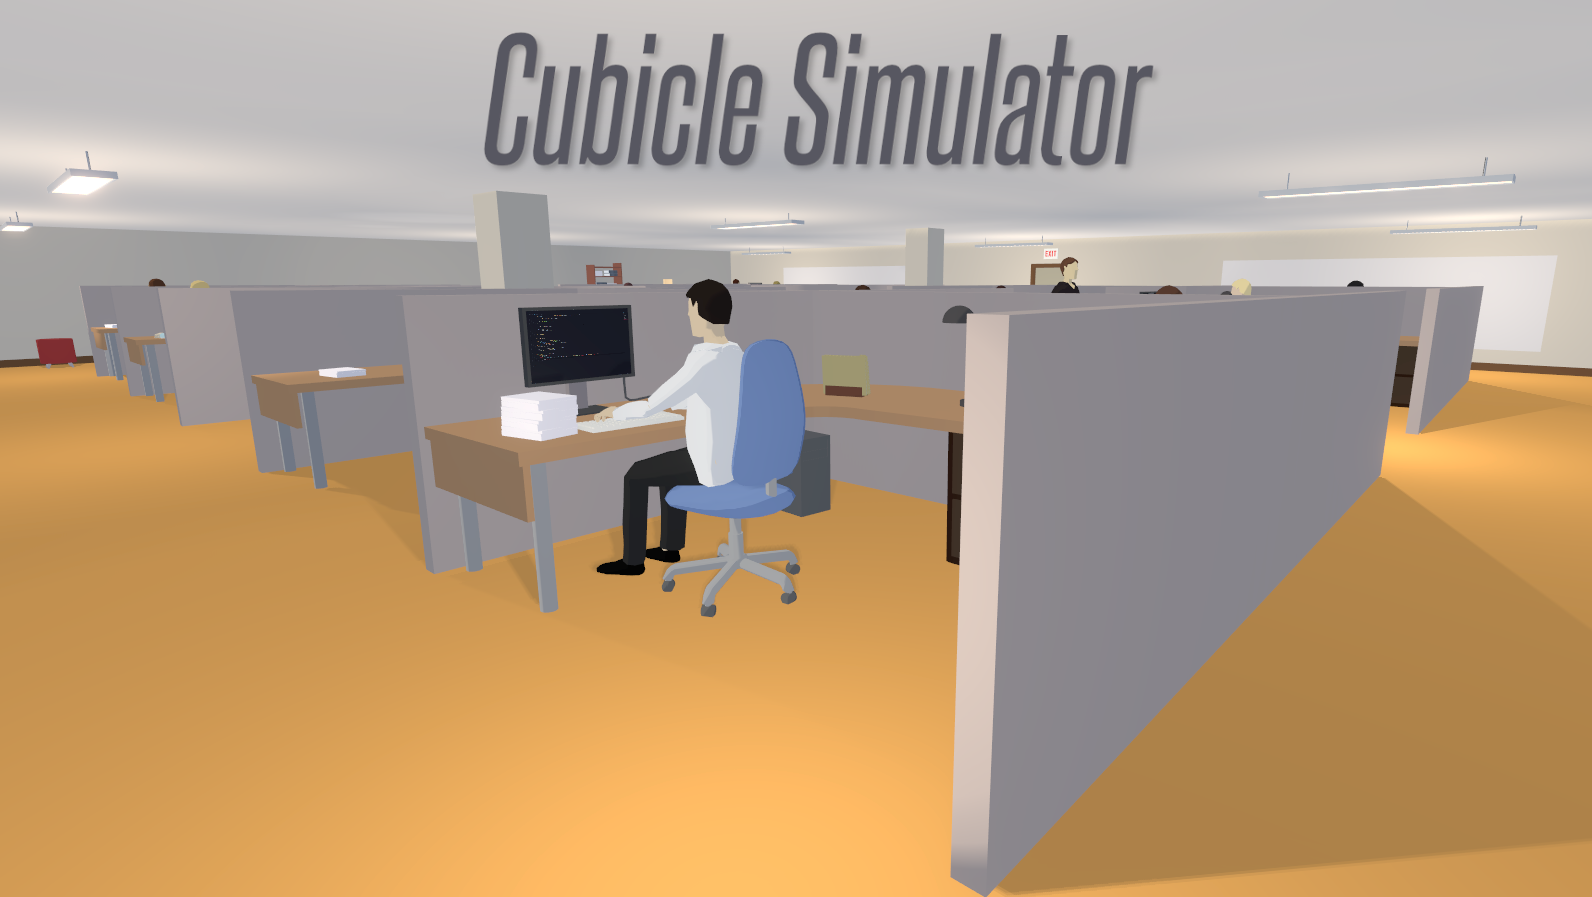 Cubicle Simulator